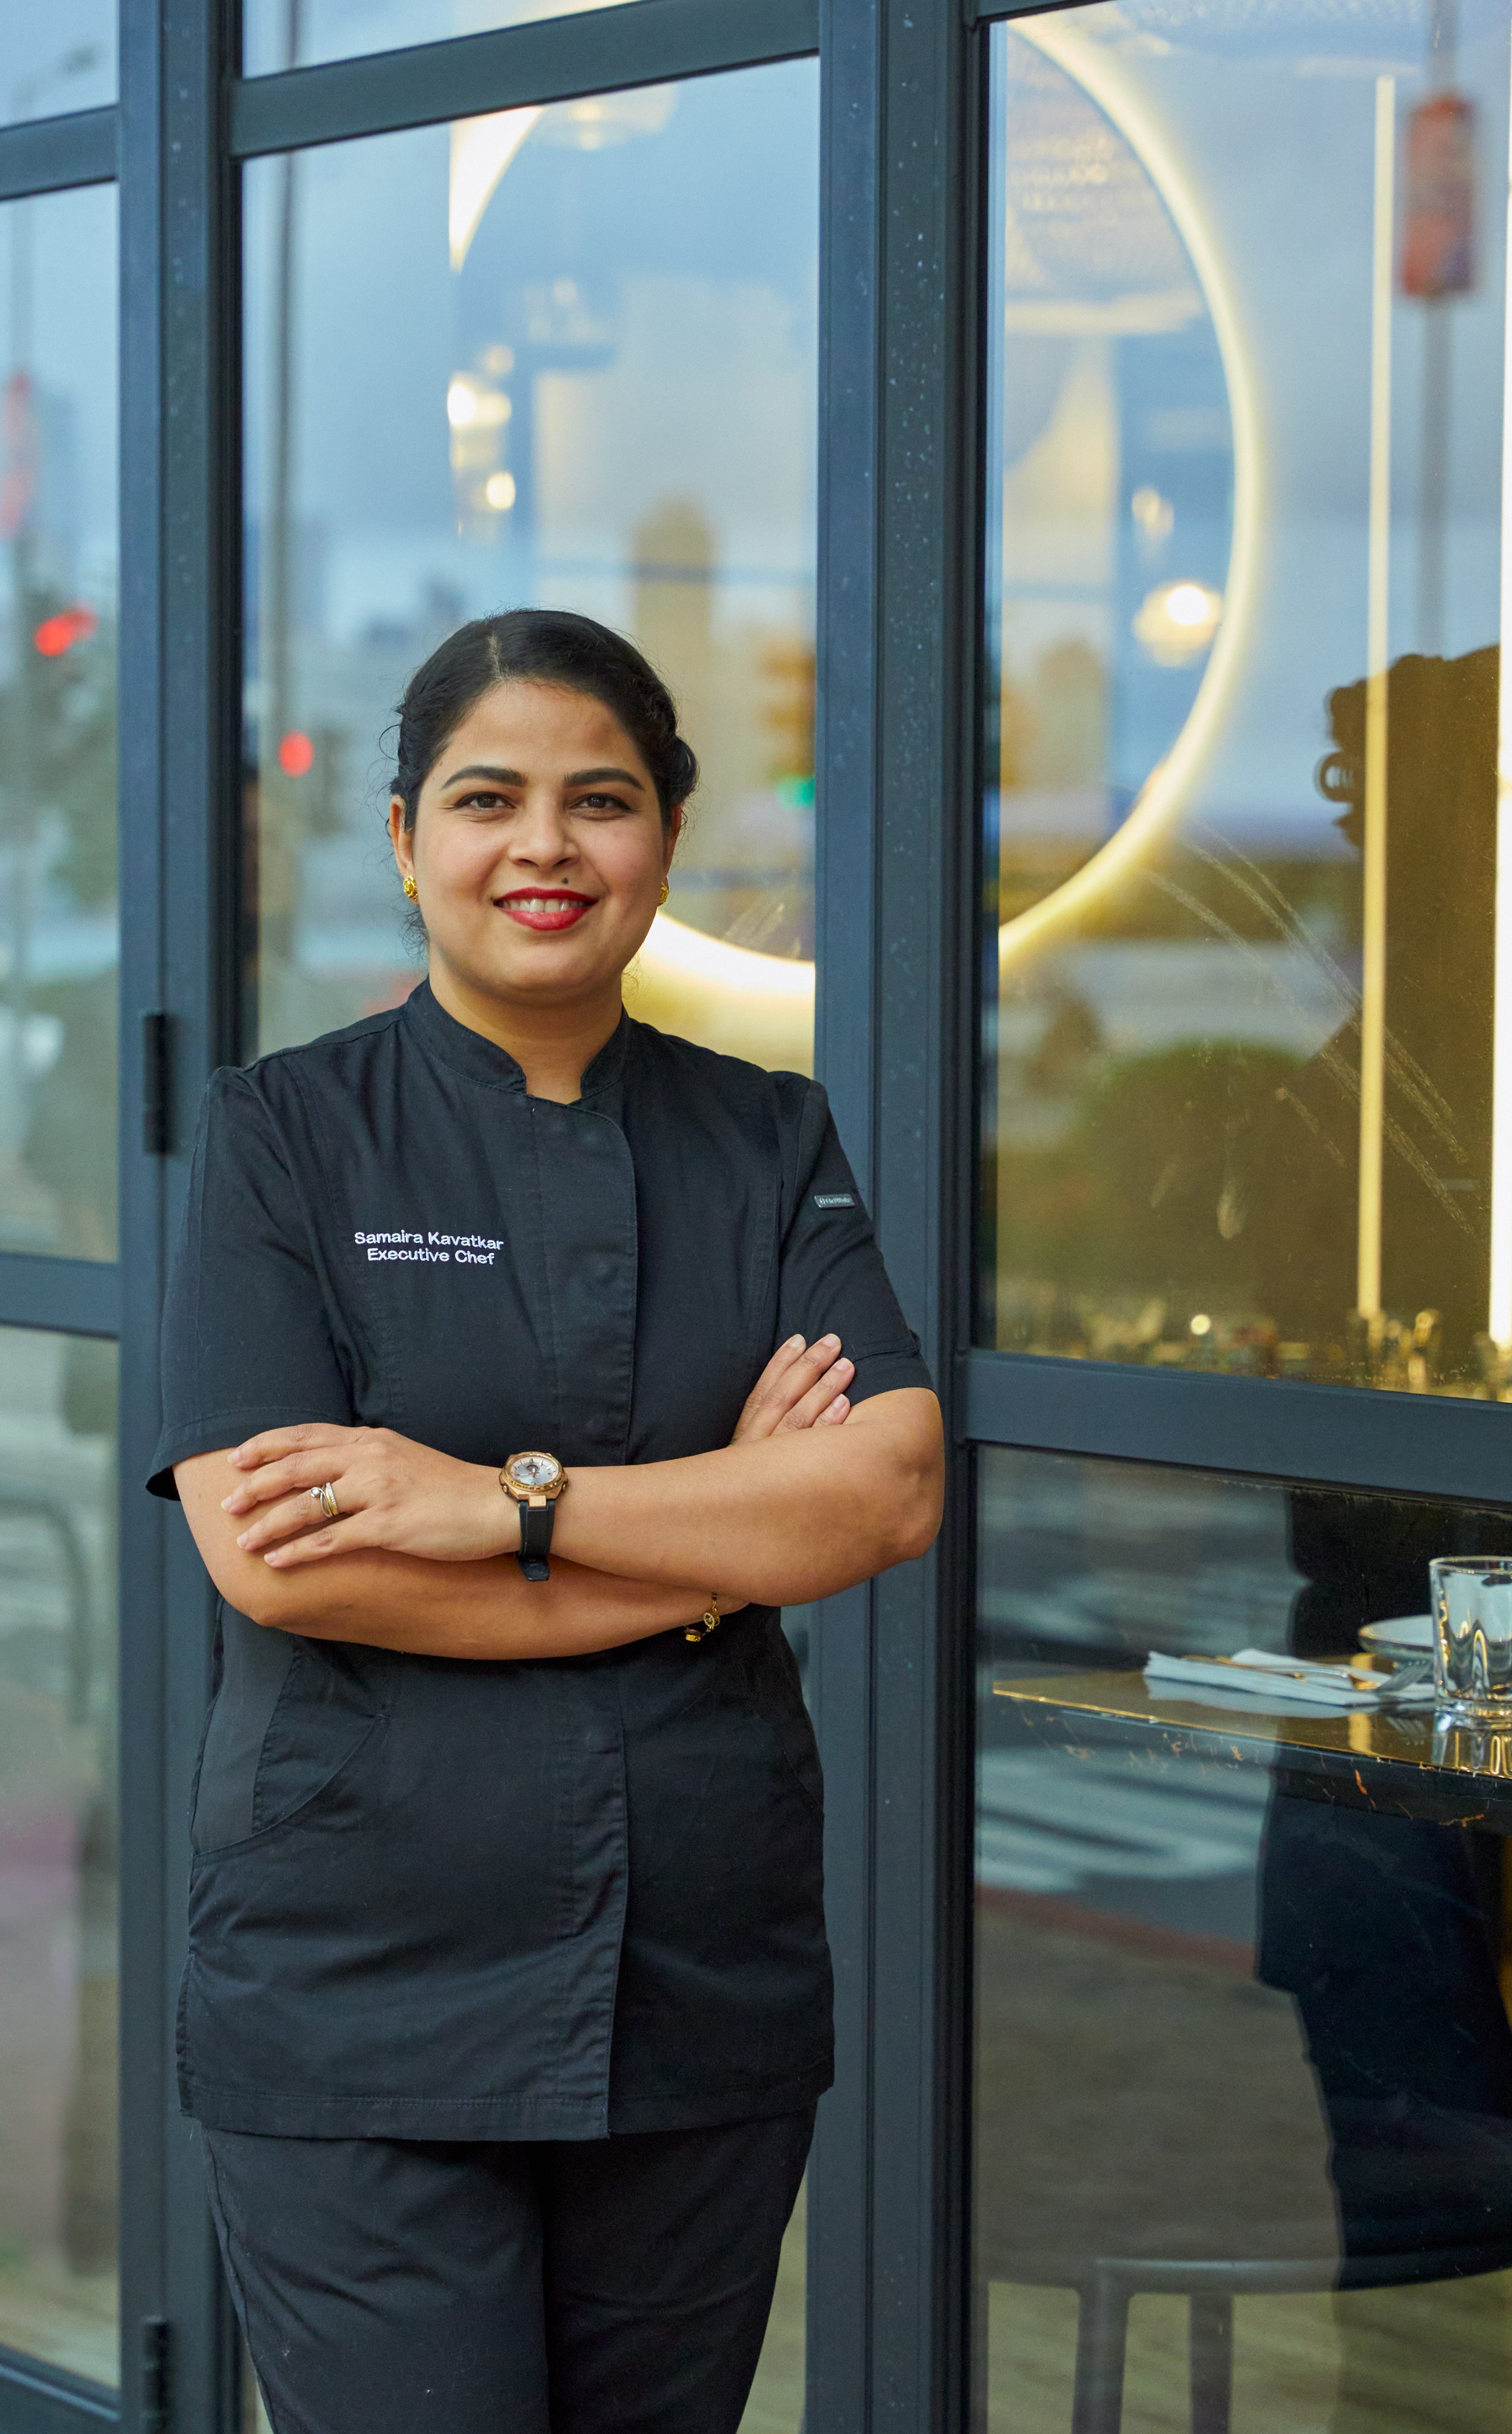 Samaira Kavatkar, head chef of Nine One. Photo: Nine One